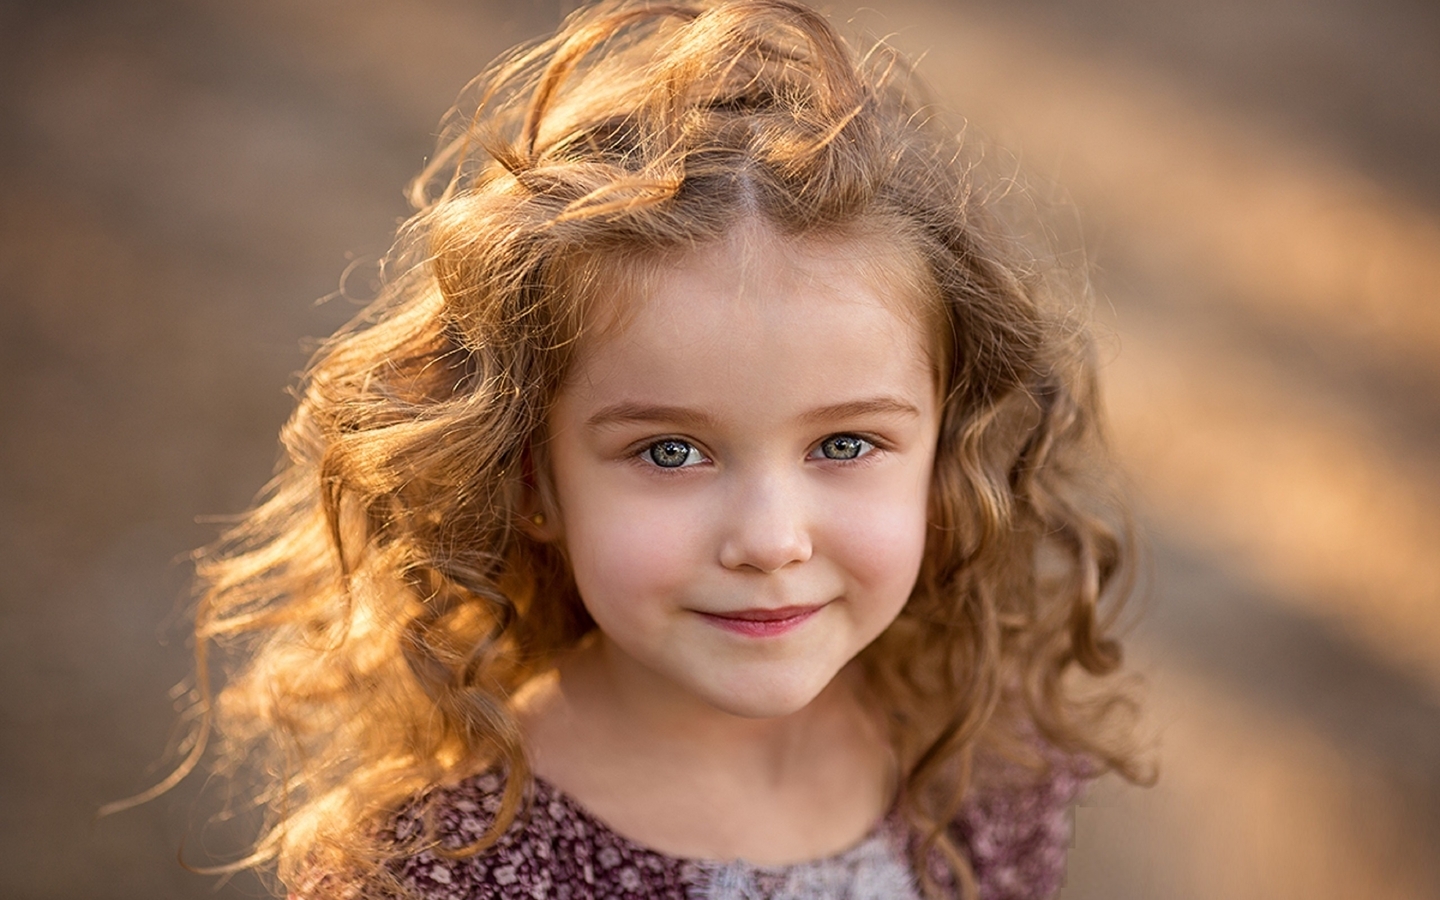 Image: Girl, curly, hair, eyes, smile, Catherine Stern, photographer